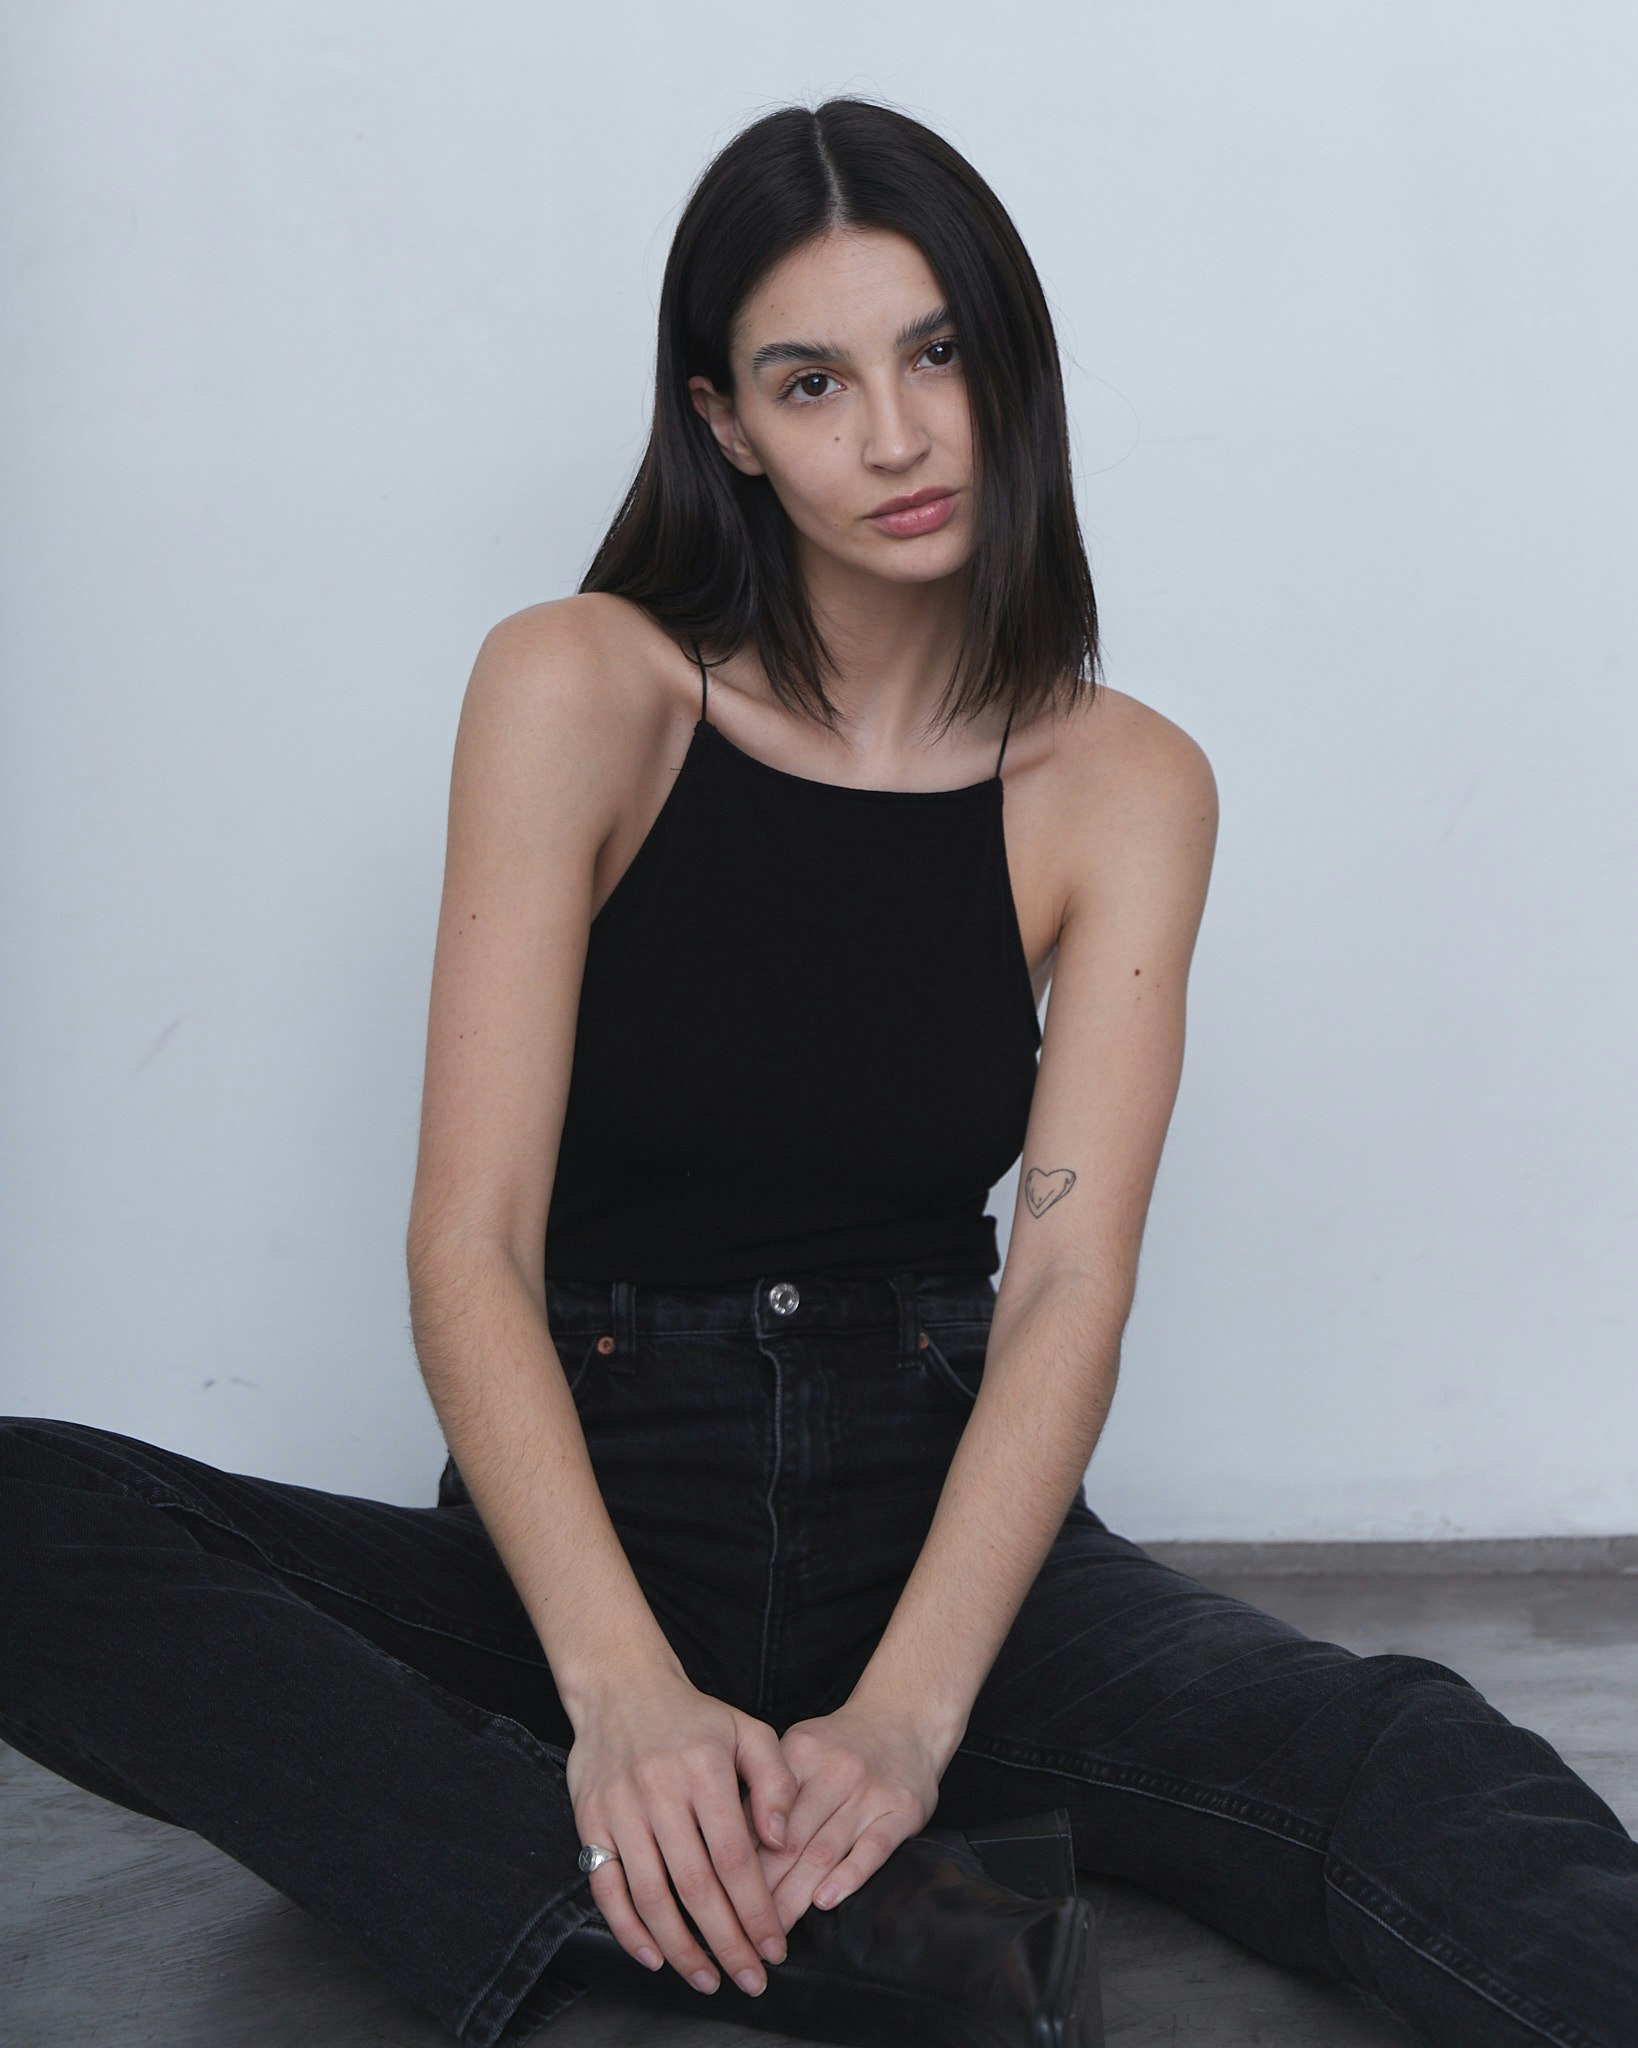 An image of Daniela Montenegro